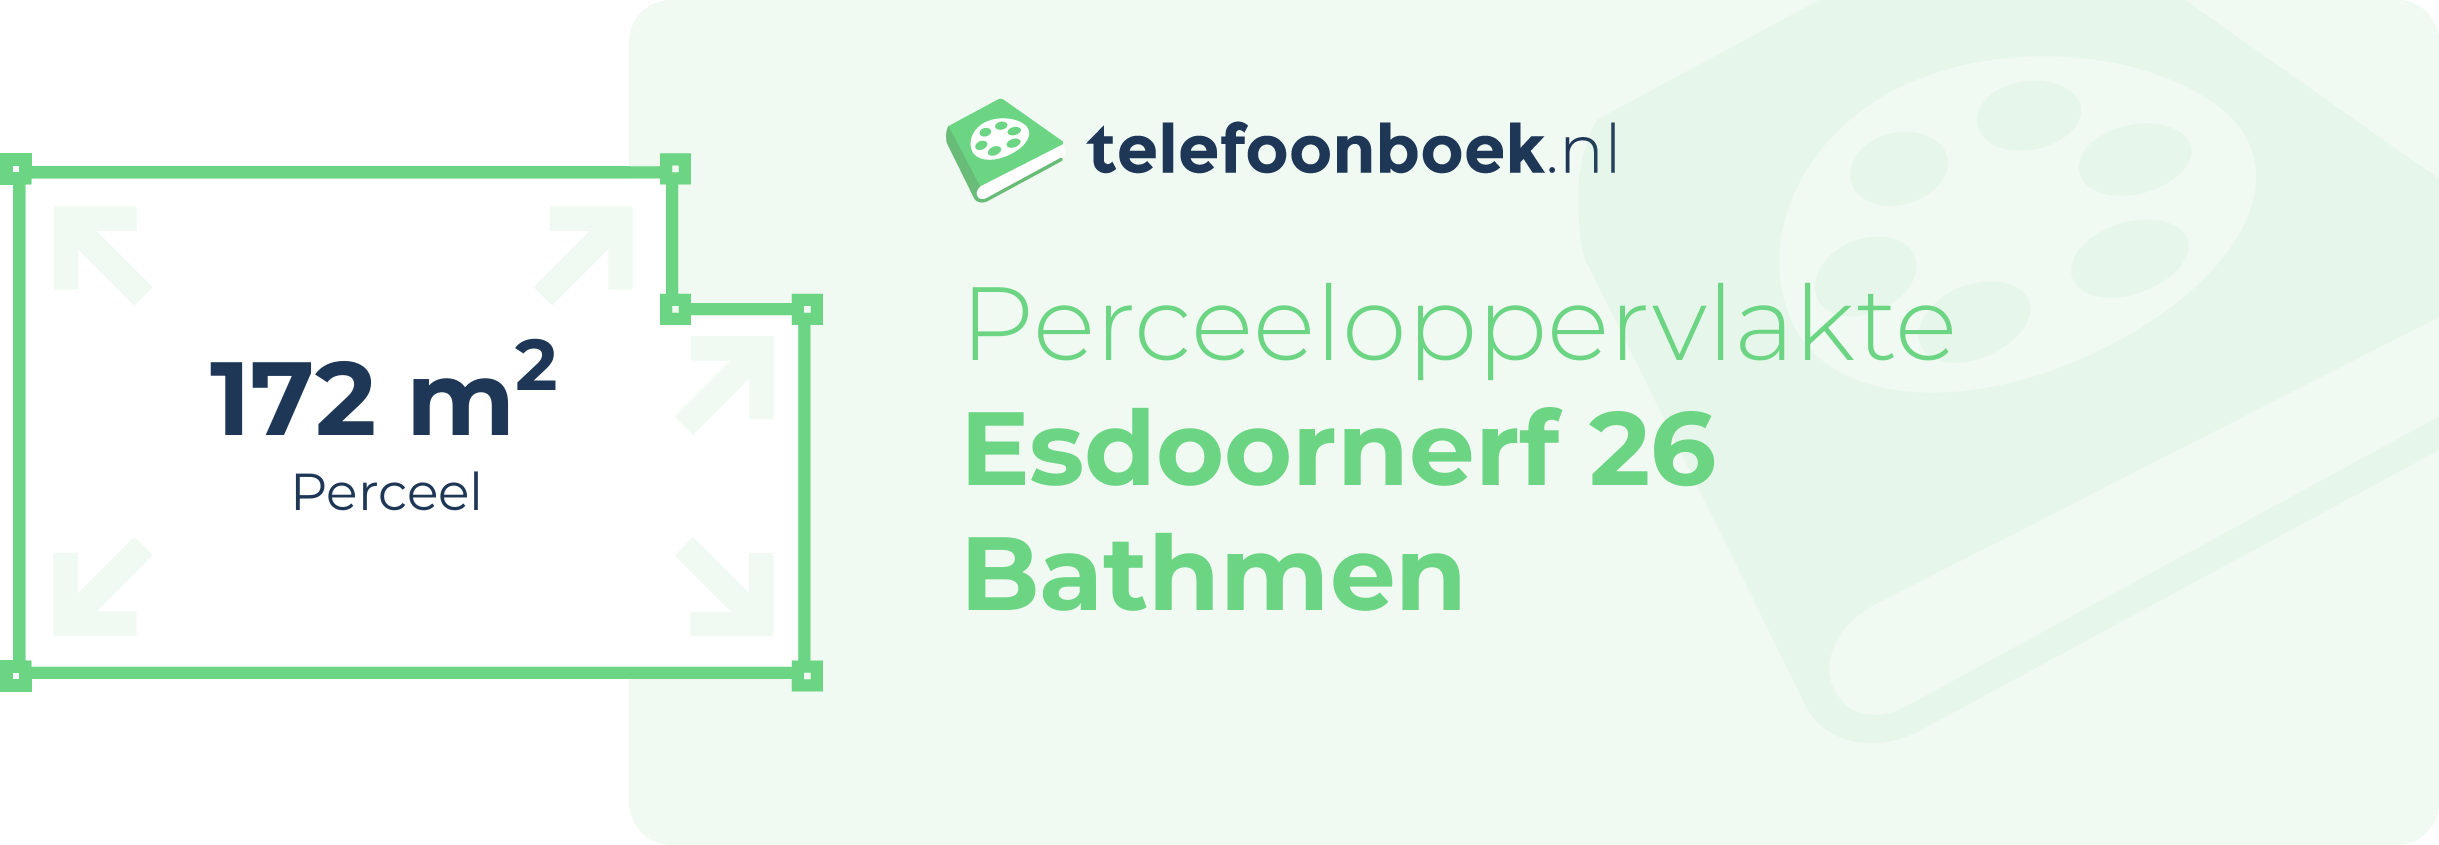 Perceeloppervlakte Esdoornerf 26 Bathmen